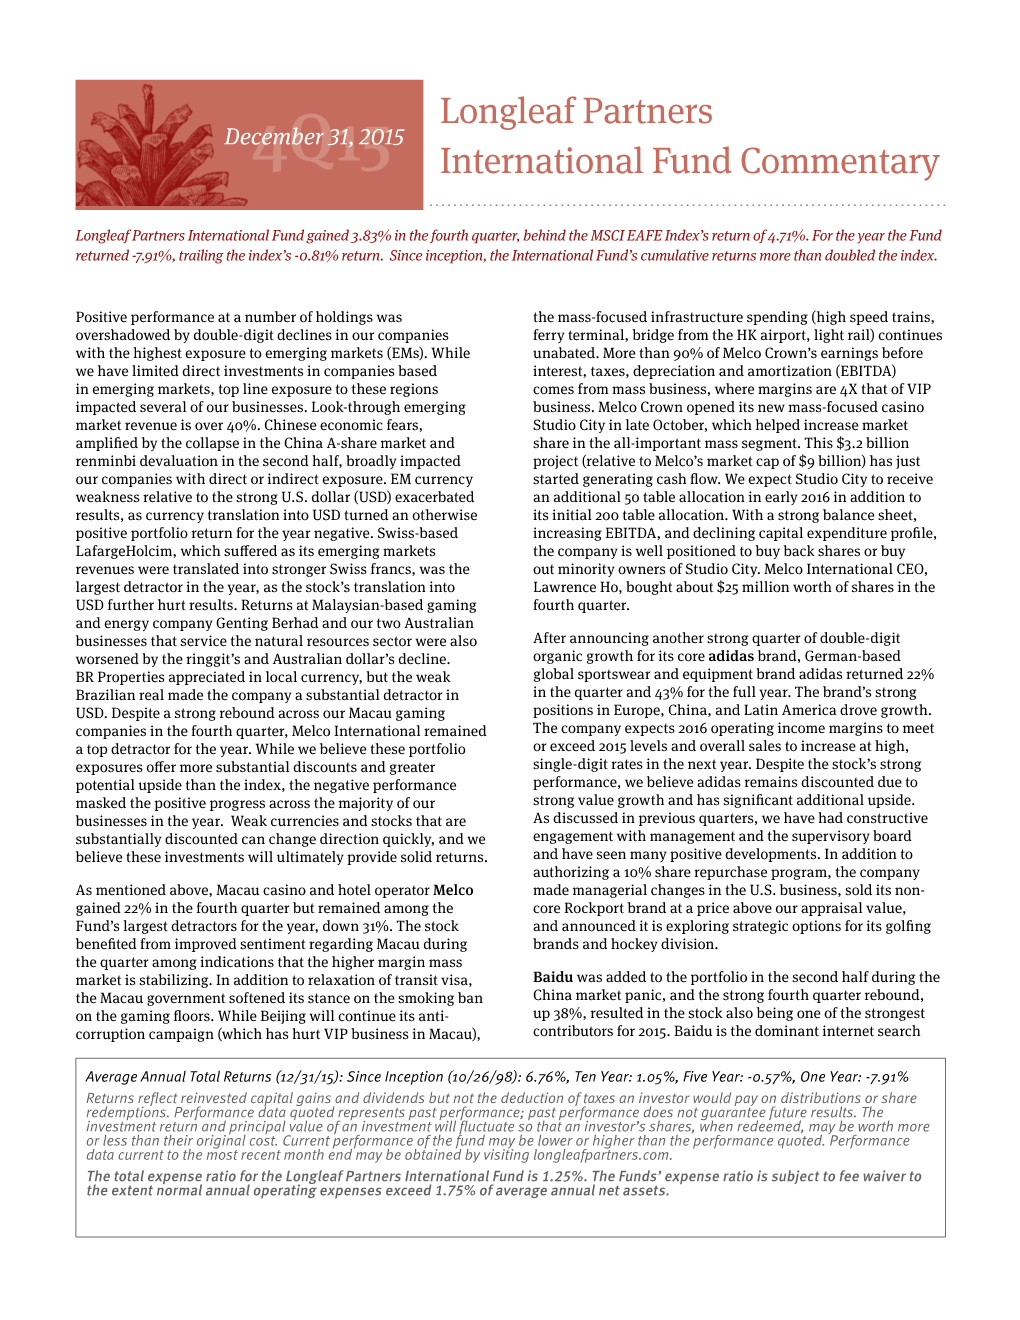 Longleaf Partners International Fund Commentary